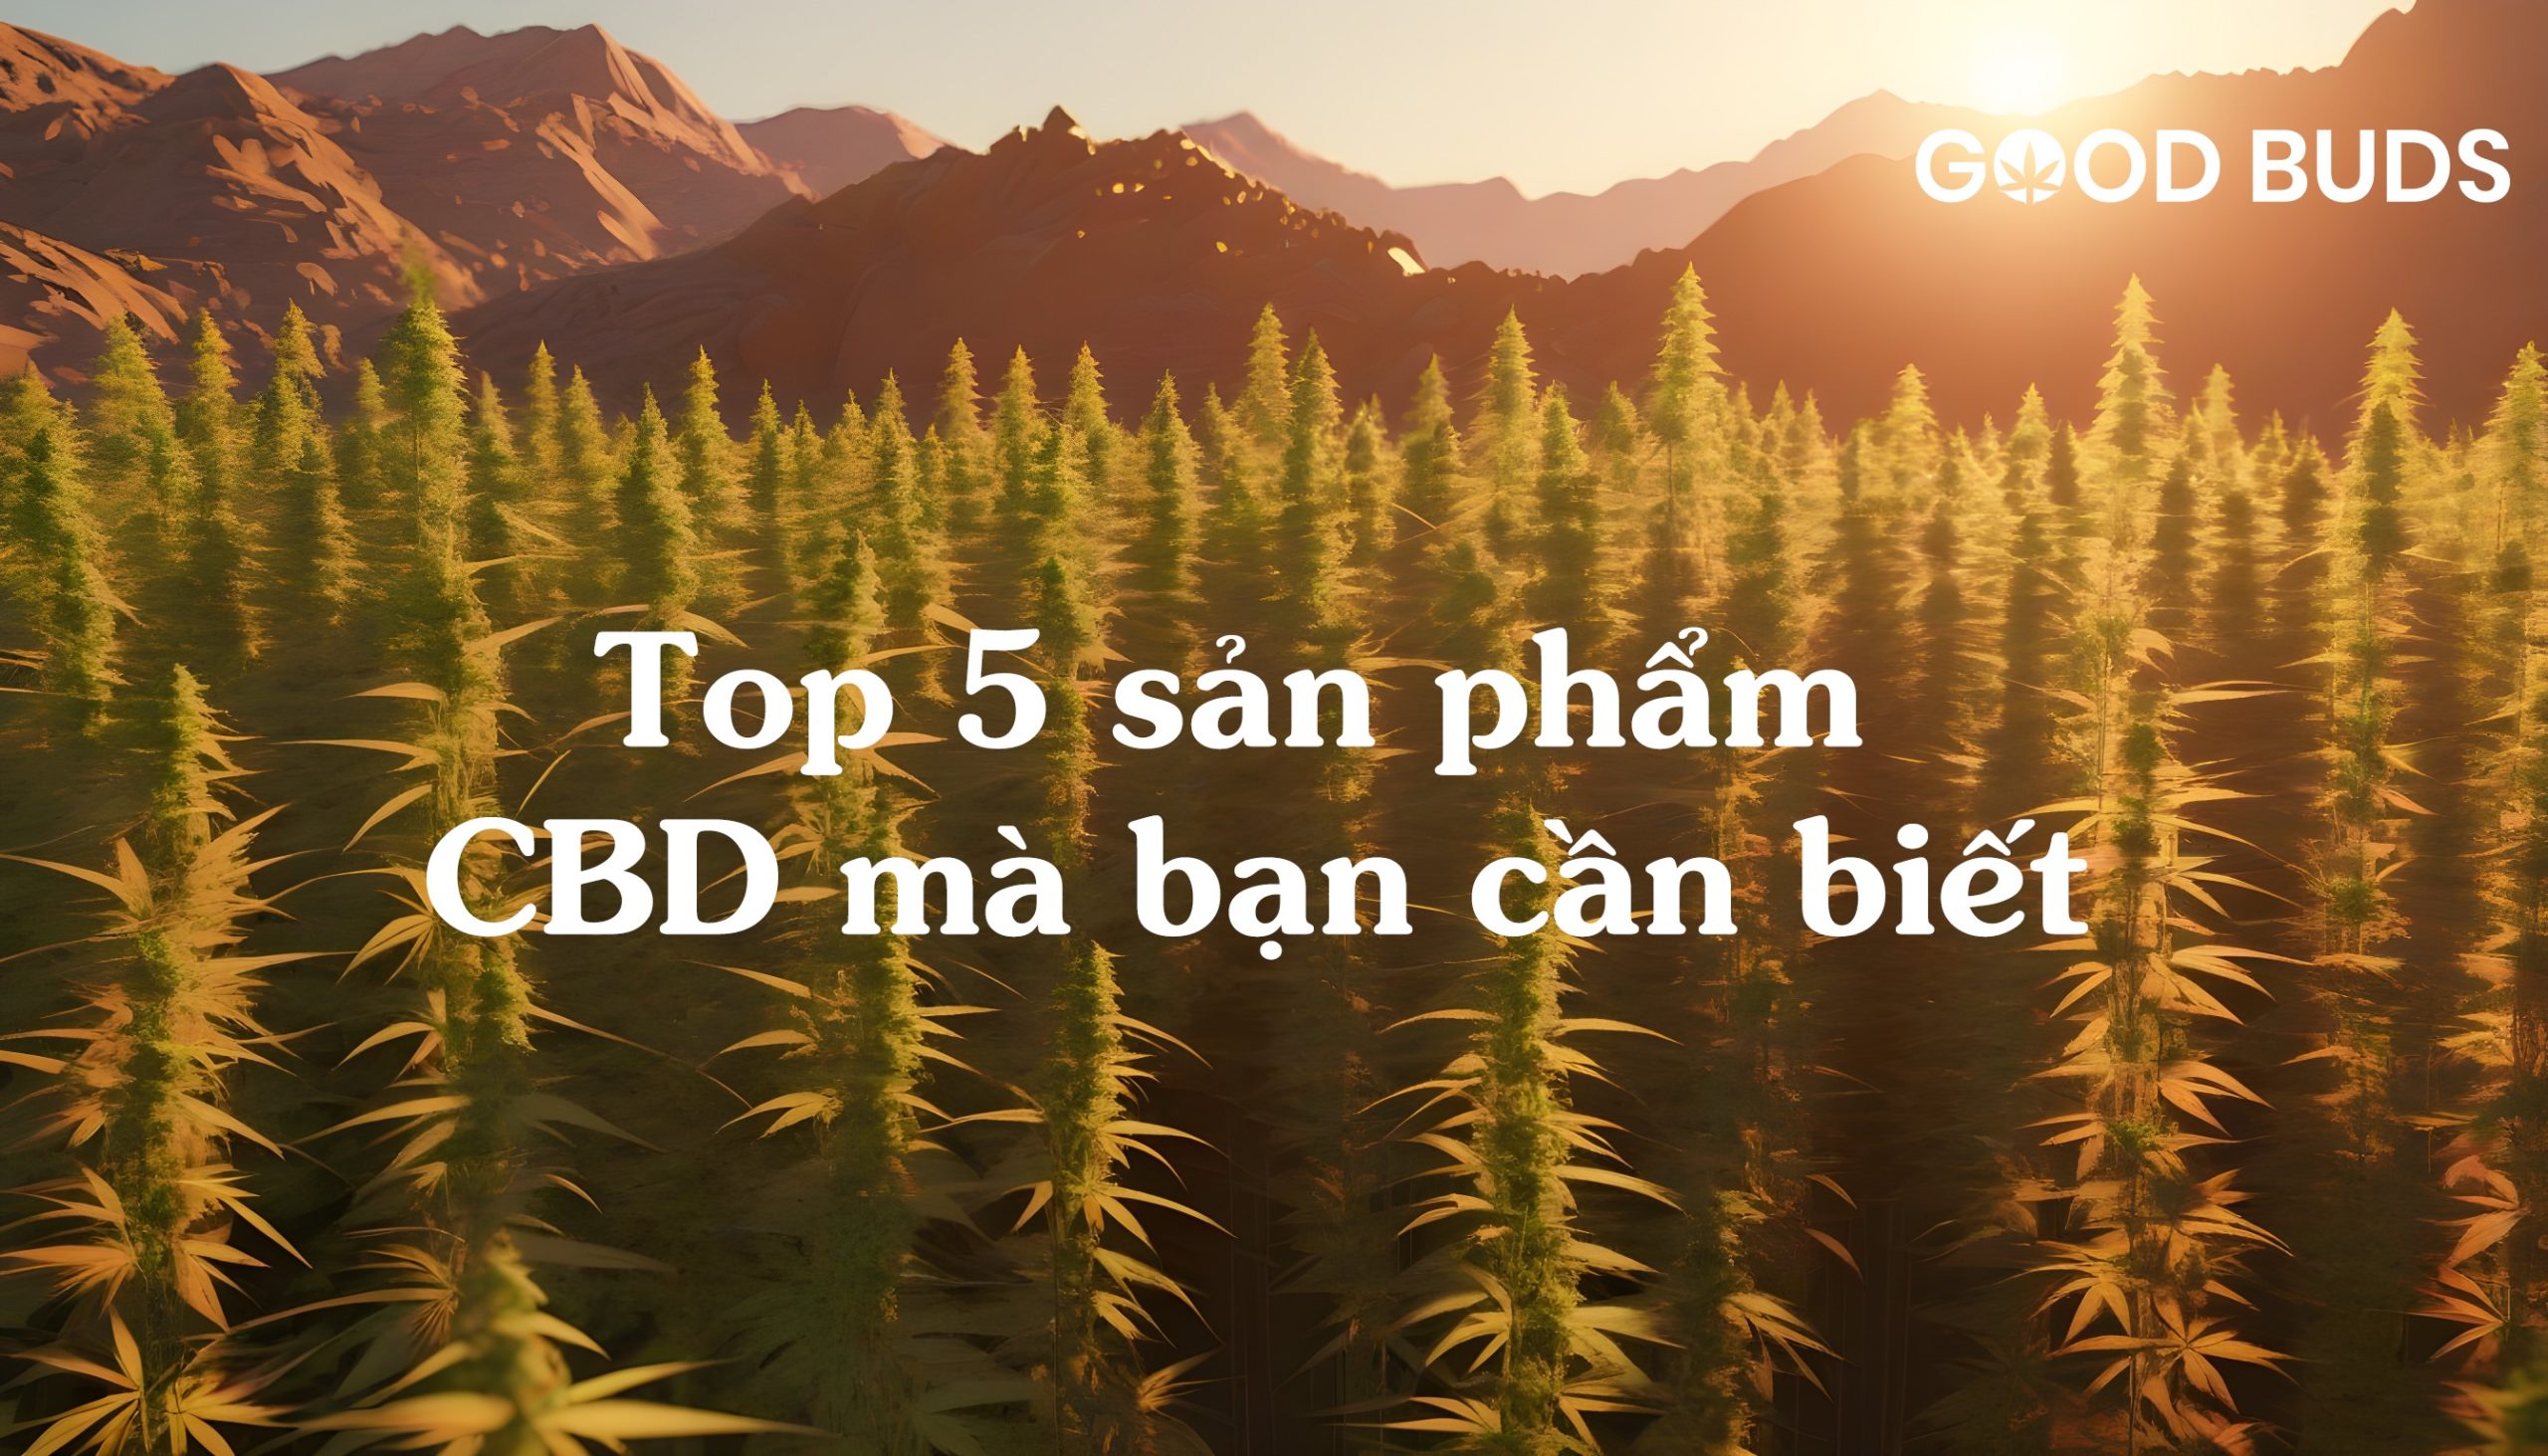 Top 5 san pham CBD ma ban can biet scaled